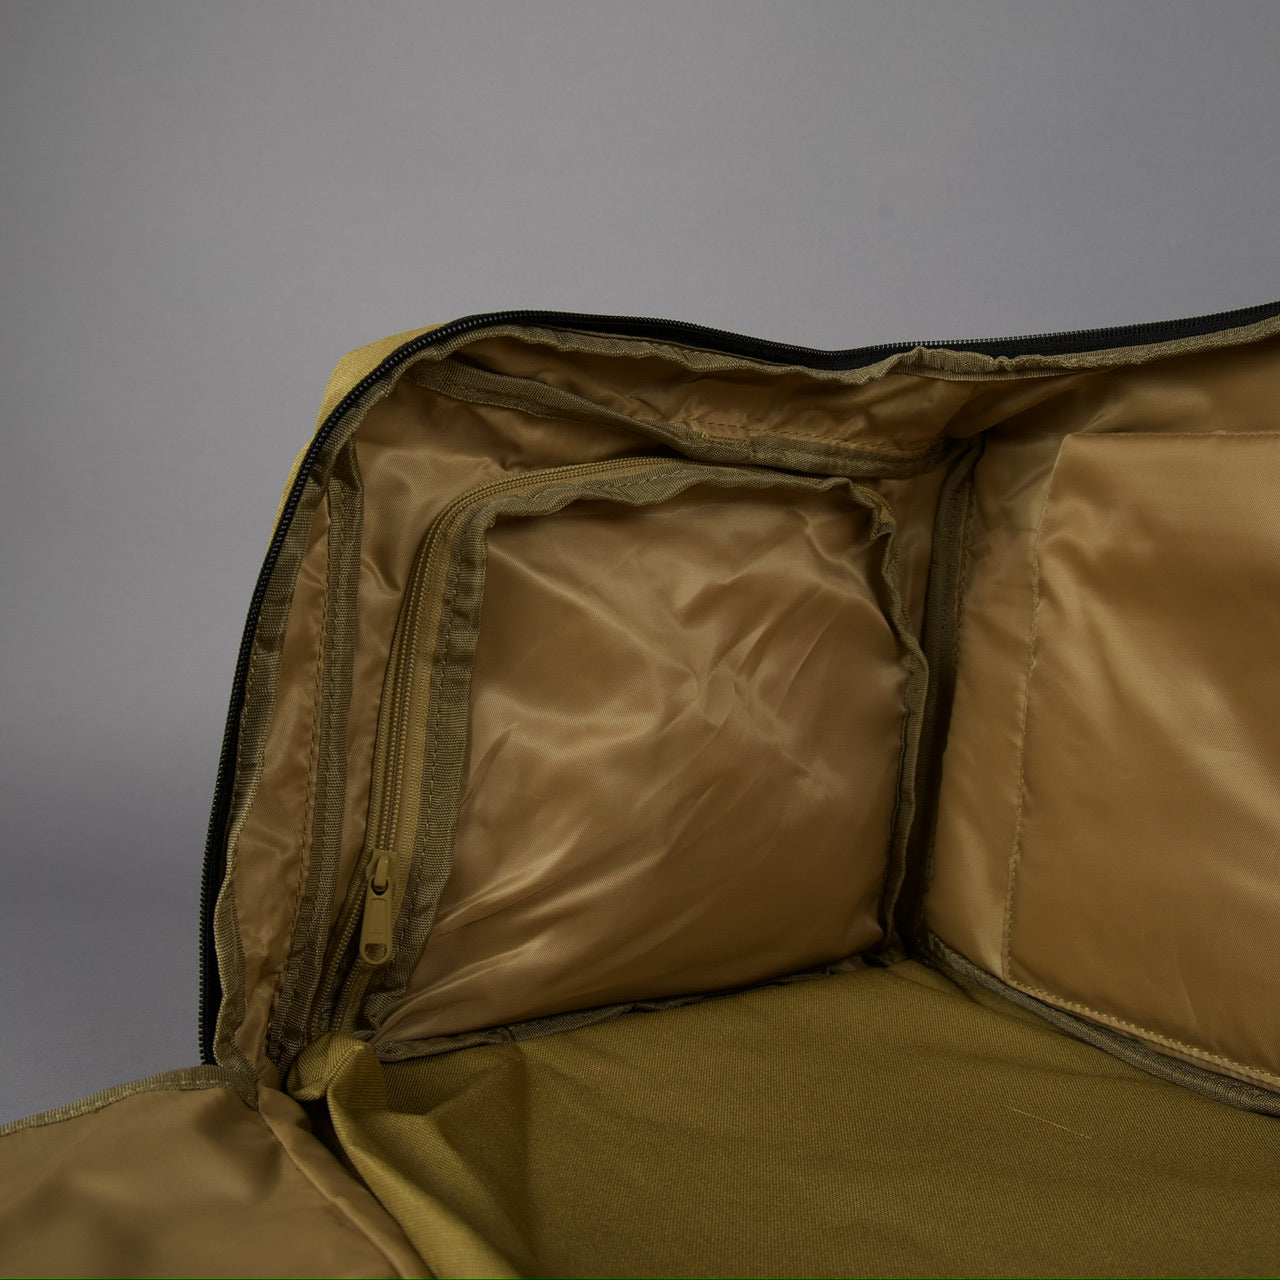 40L Ultimate Duffle Bag Khaki